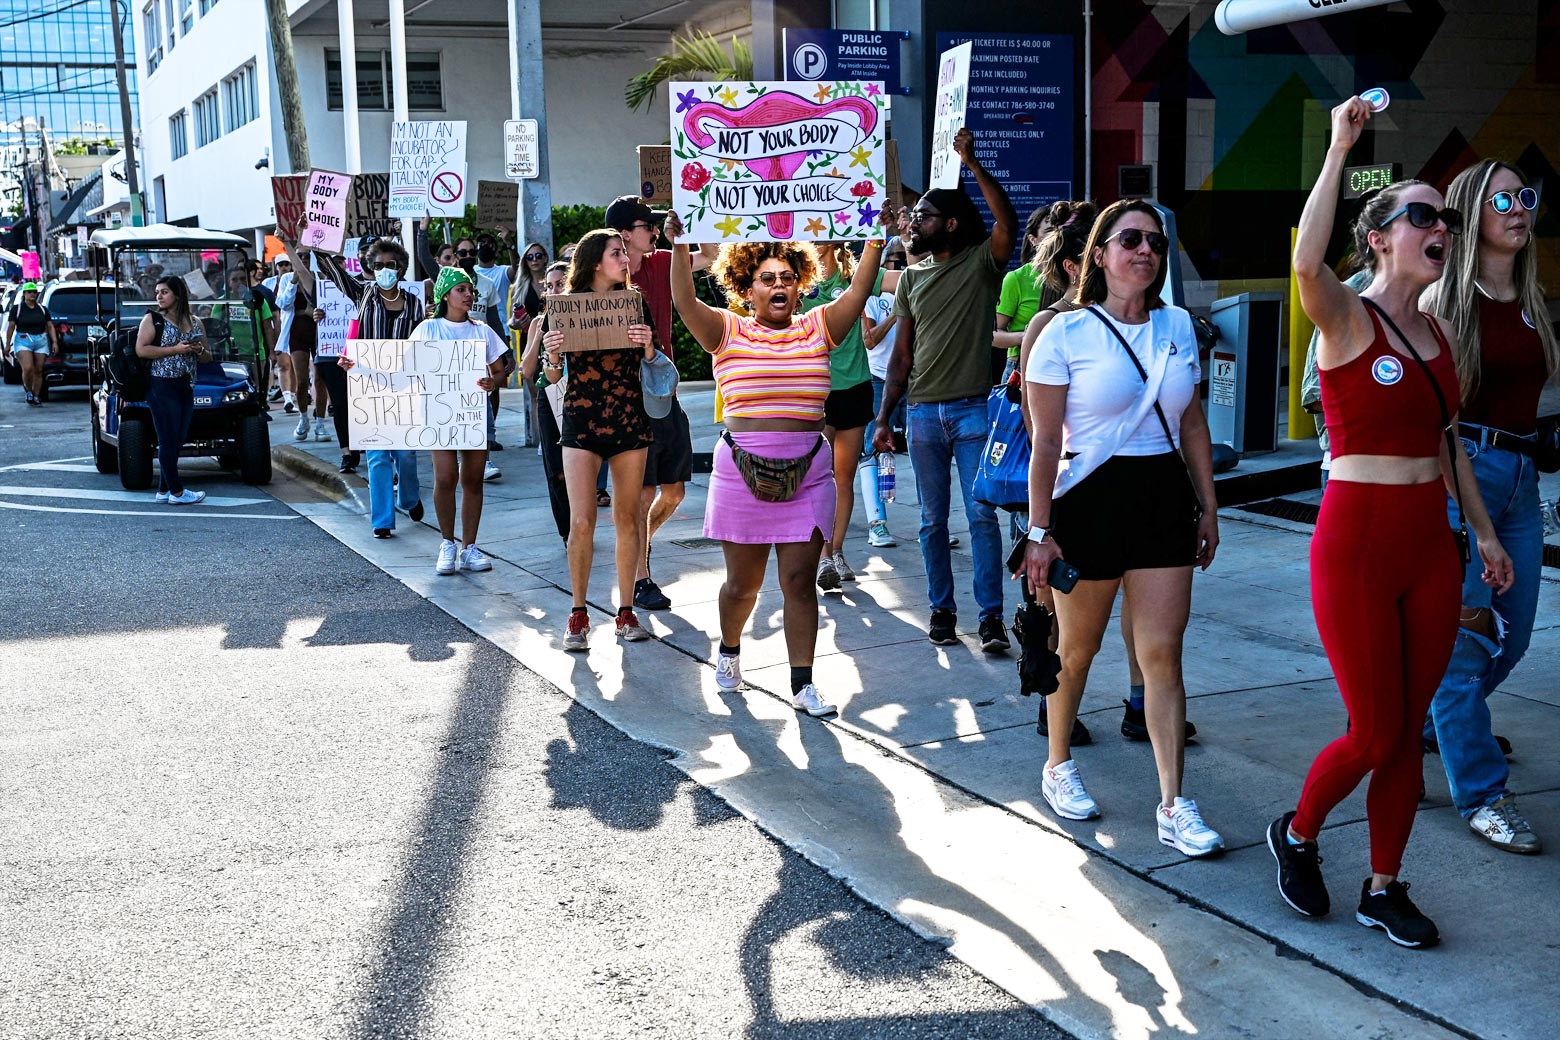 Florida now has a six-week abortion ban David Plotz, Emily Bazelon, and John Dickerson